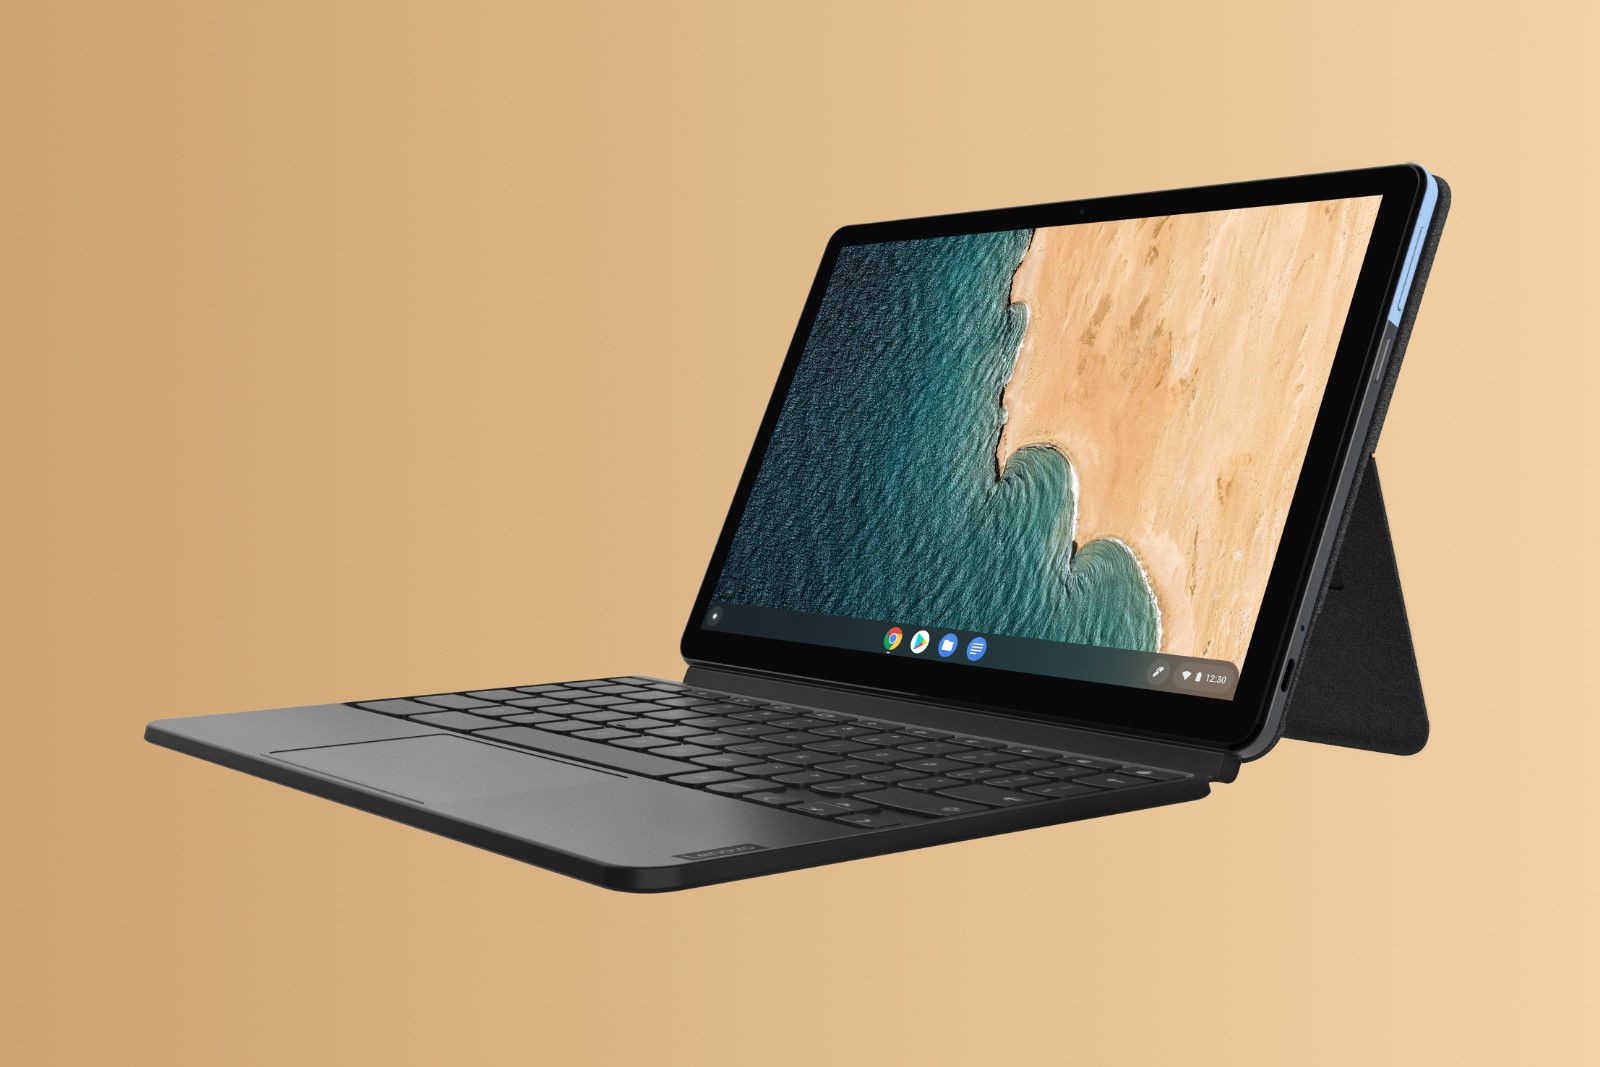 Lenovo Chromebook tablet thing image 1